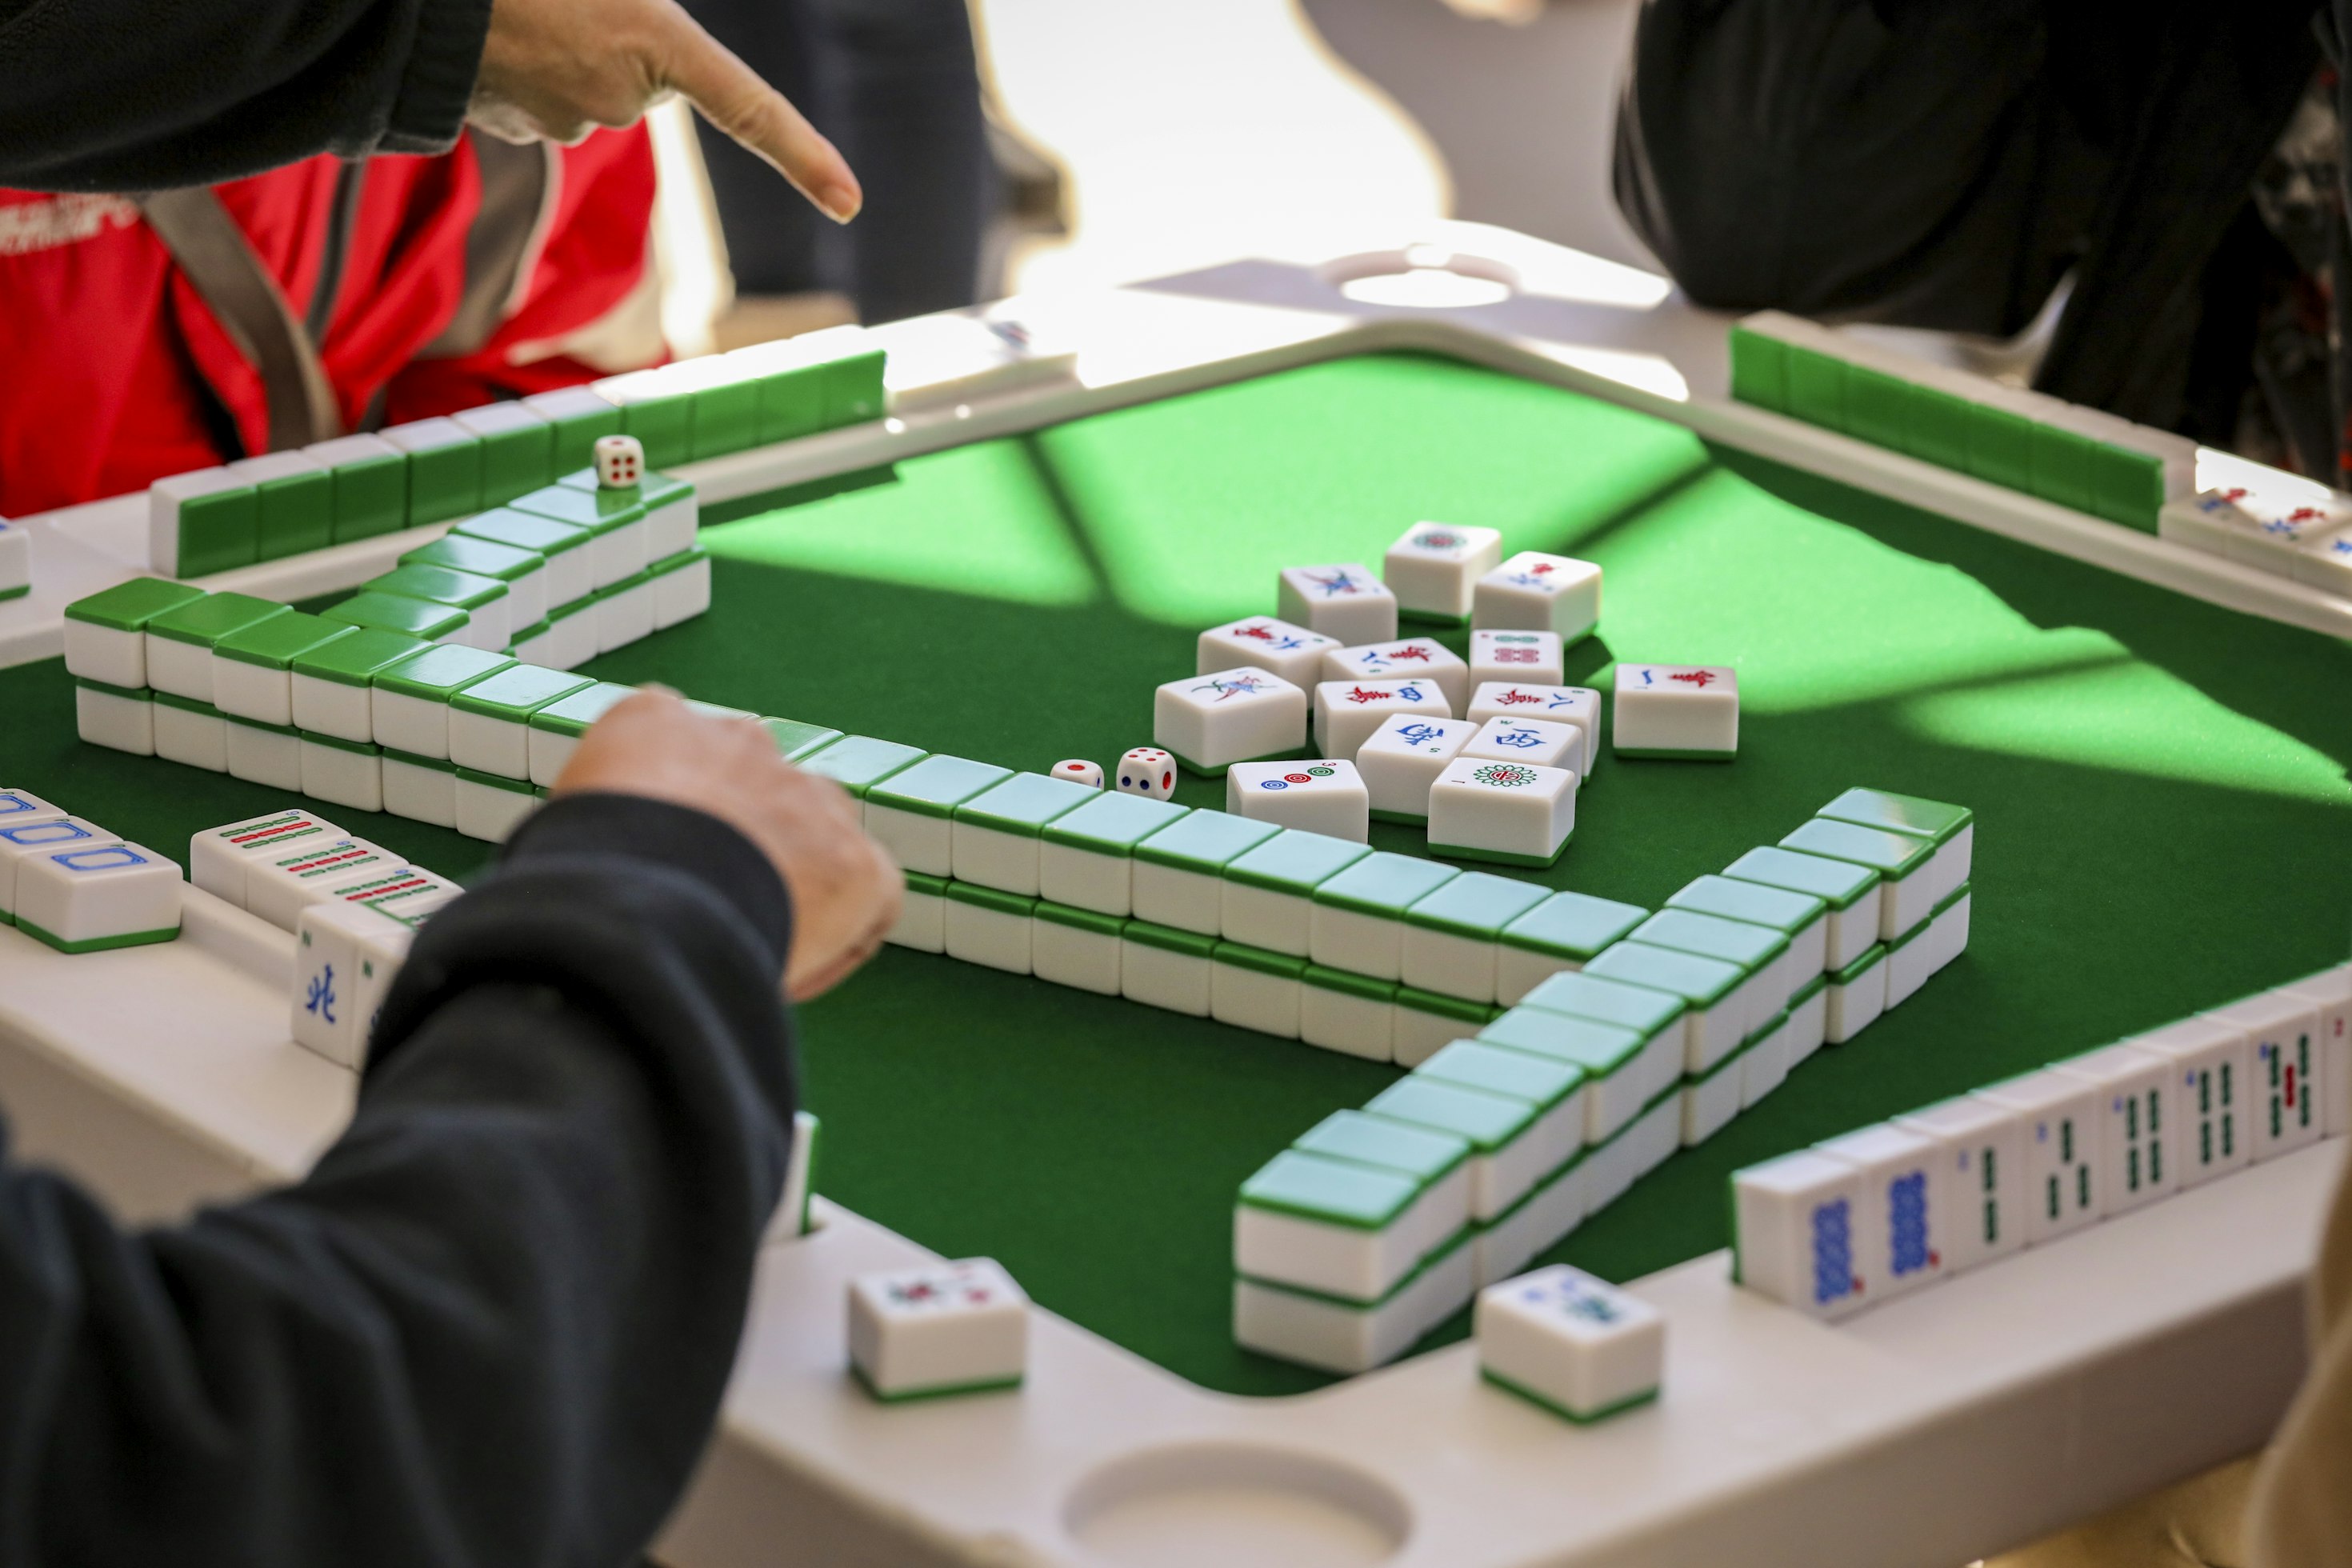 personalized mahjong tiles